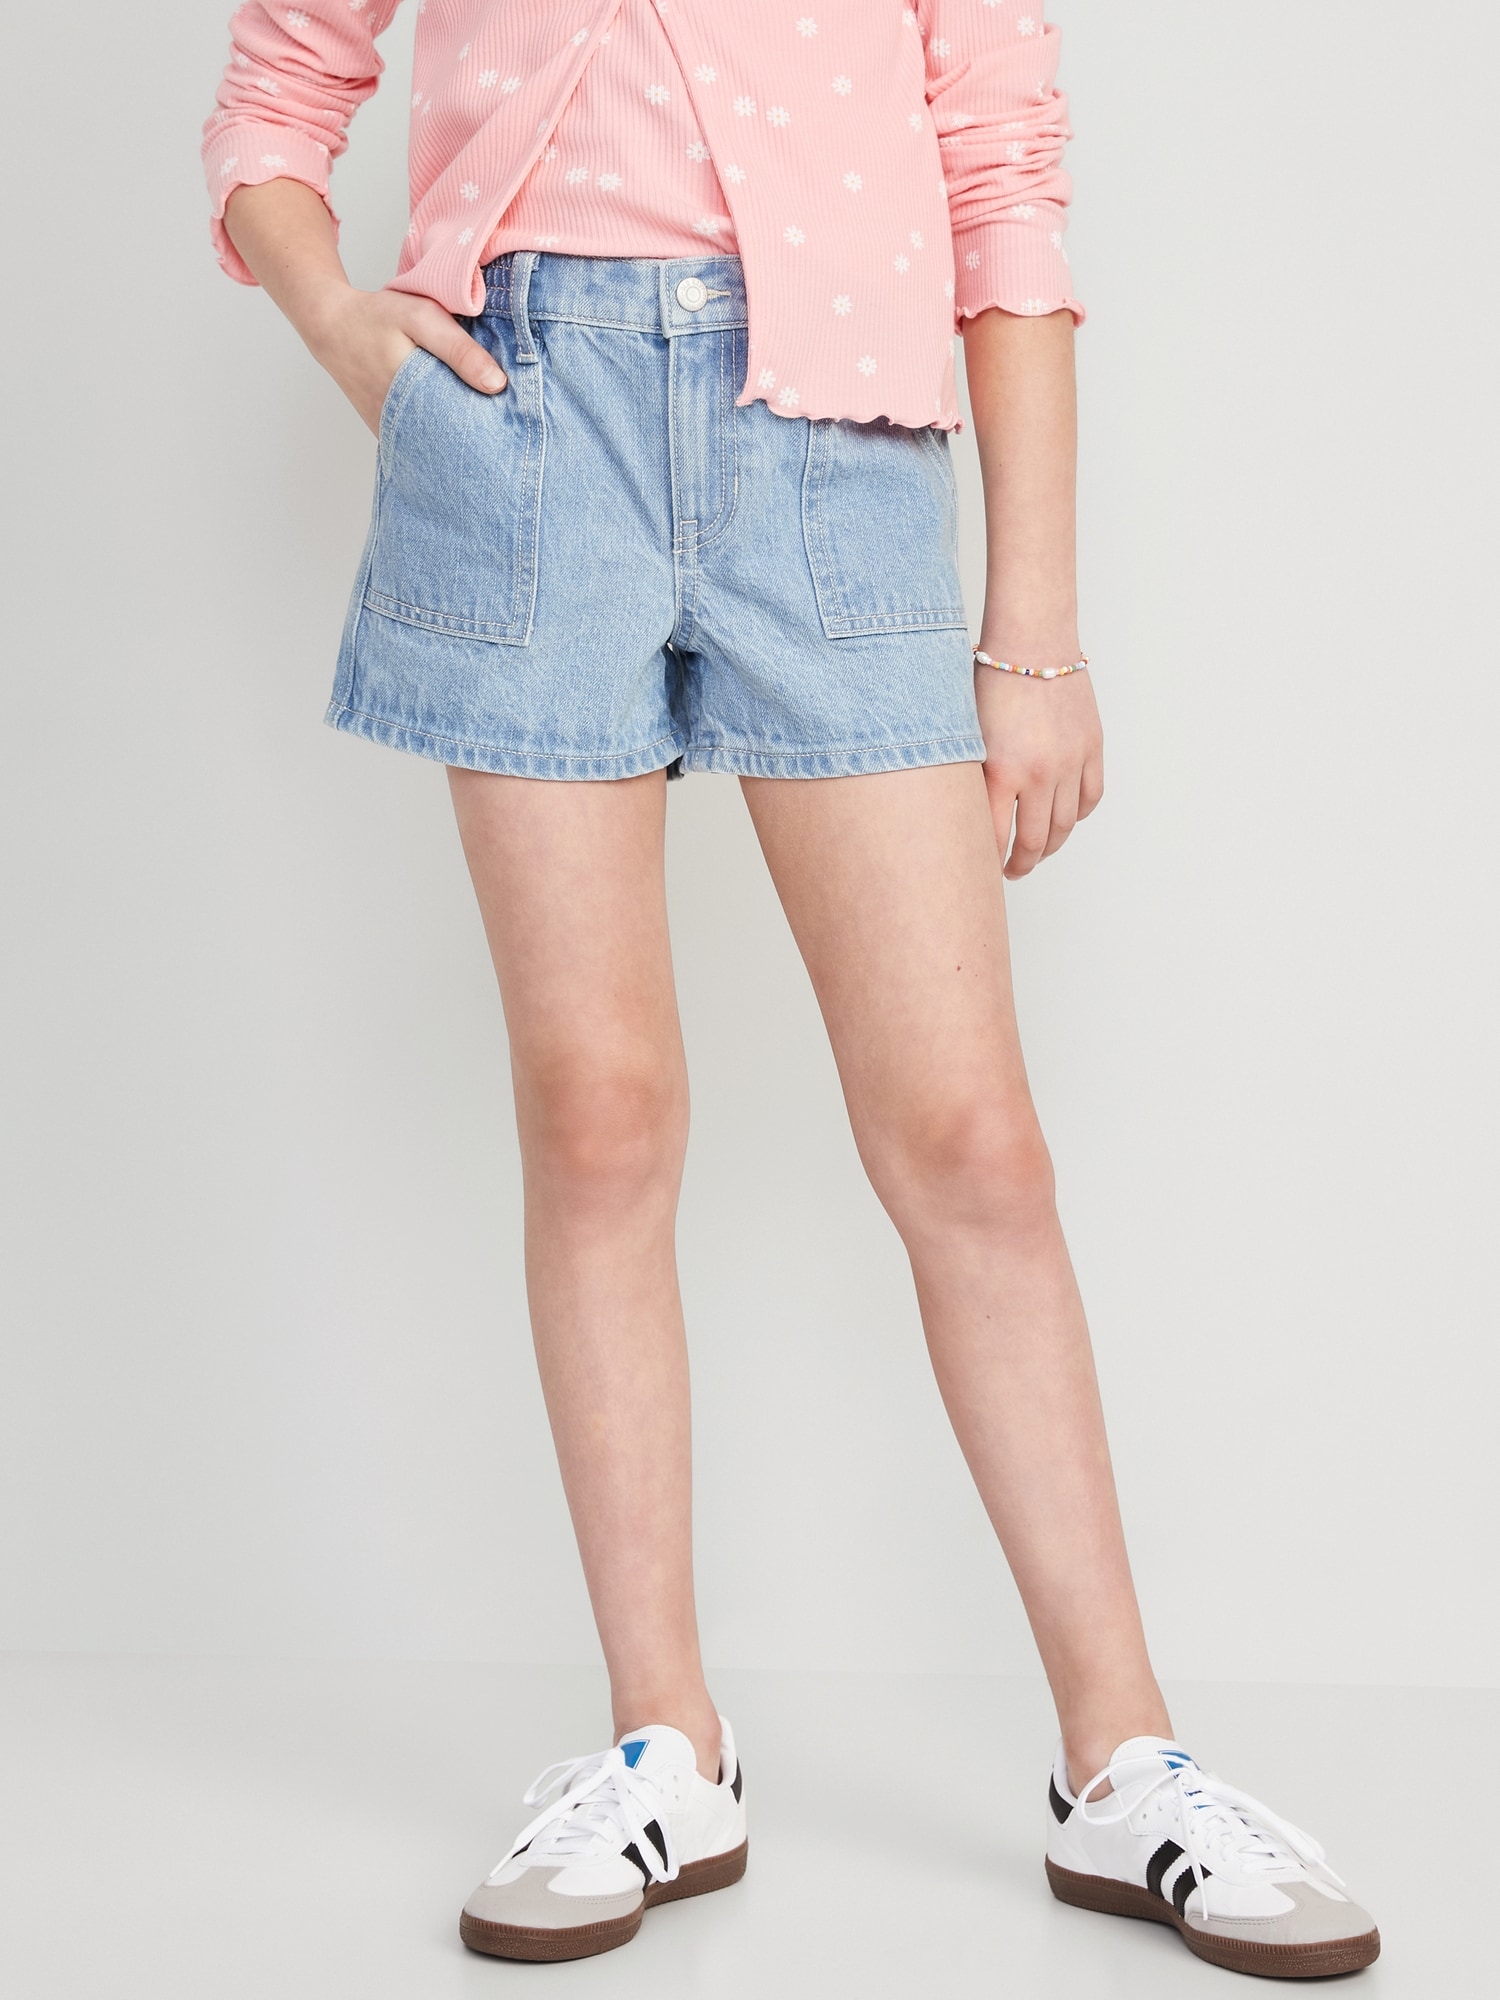 Elasticized Waist Workwear Non-Stretch Jean Shorts for Girls